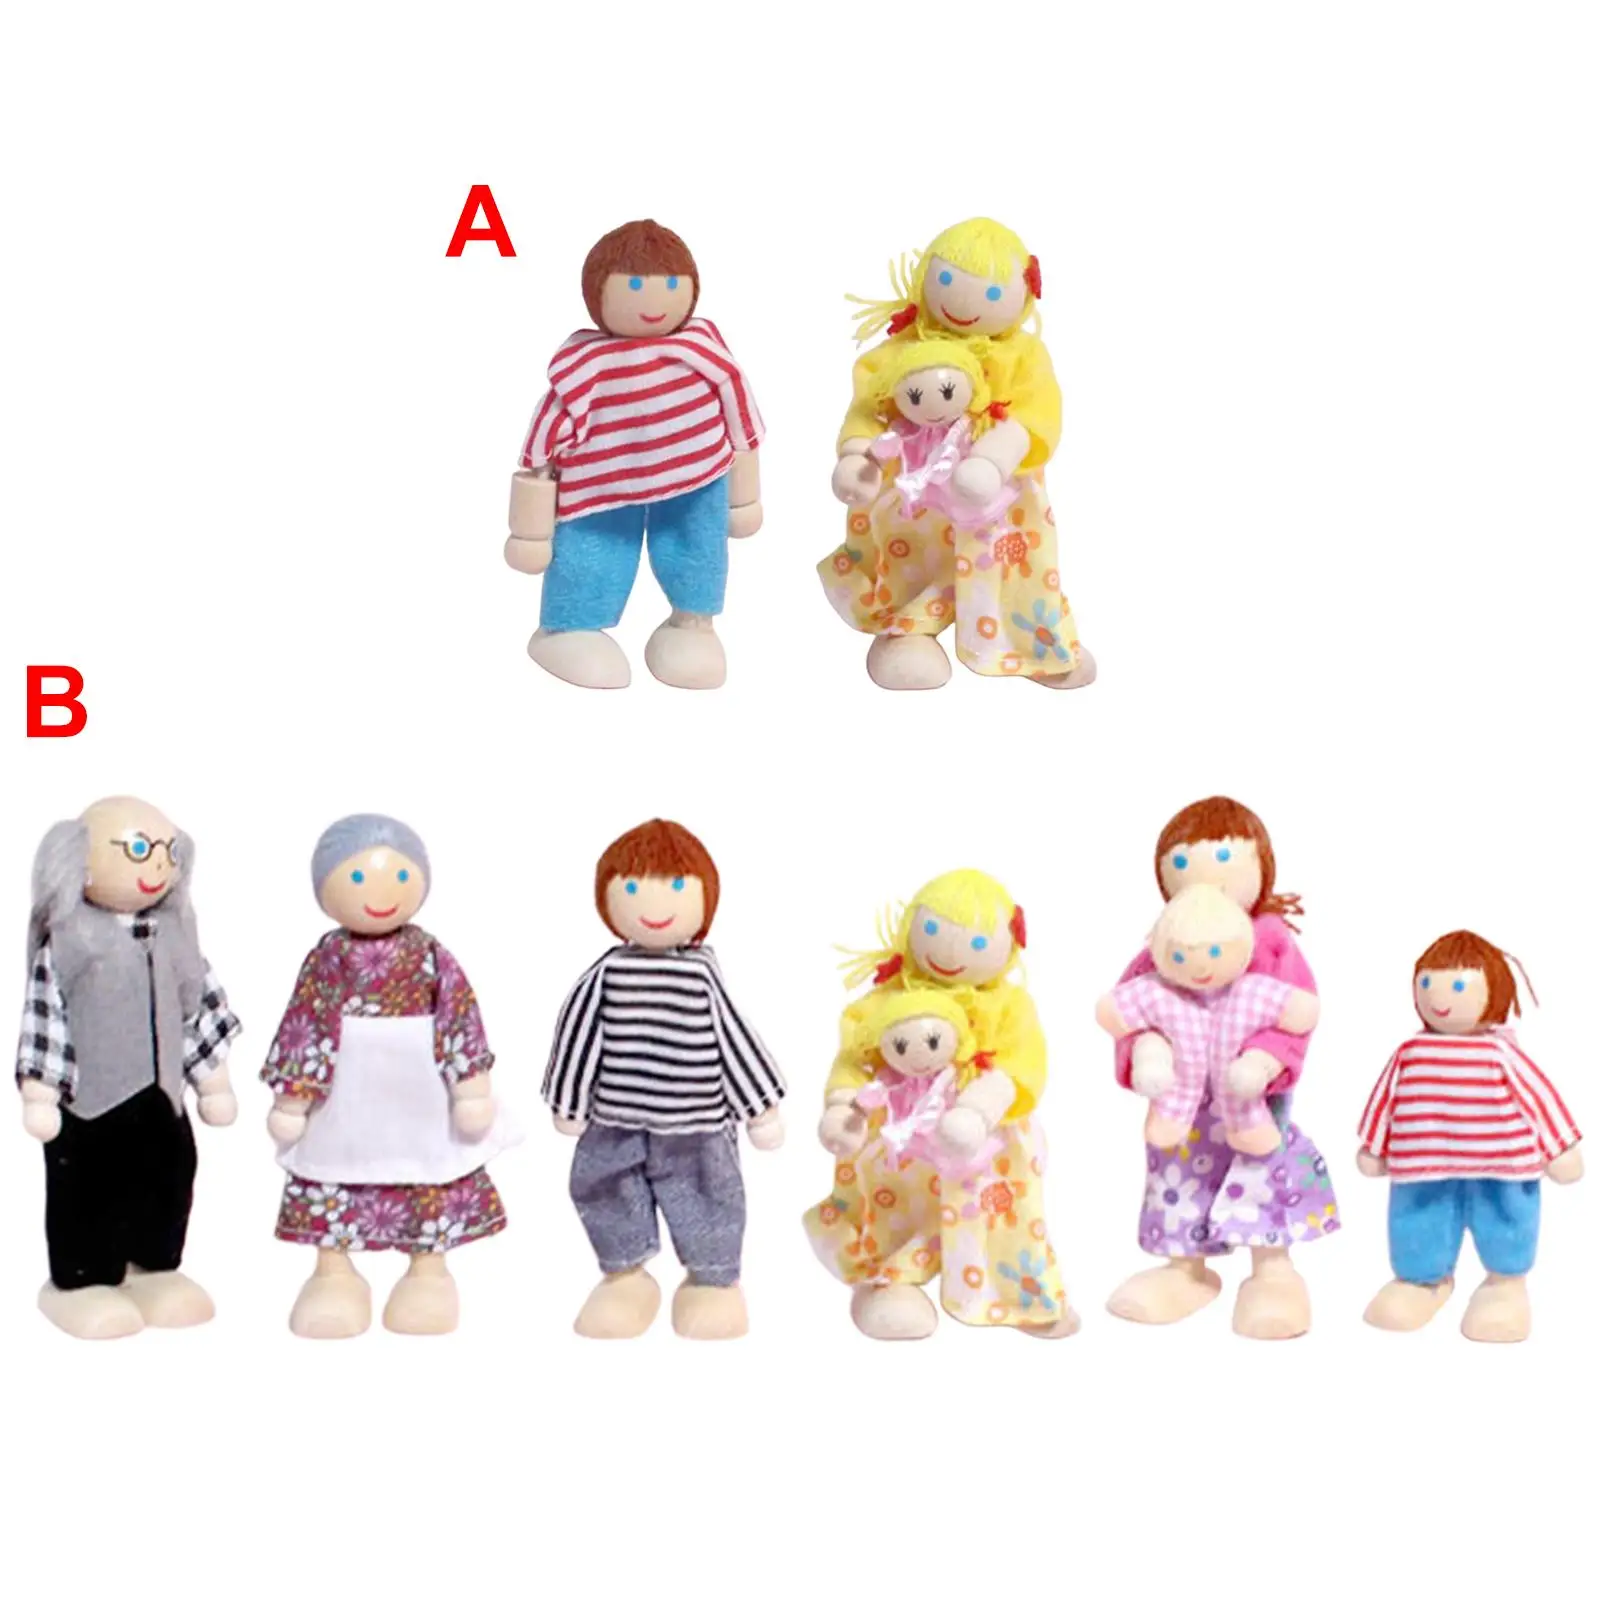 Dollhouse Family Set Dollhouse Dolls Pretend Play Figures, Miniature Doll House Doll Figures, Family Role Play